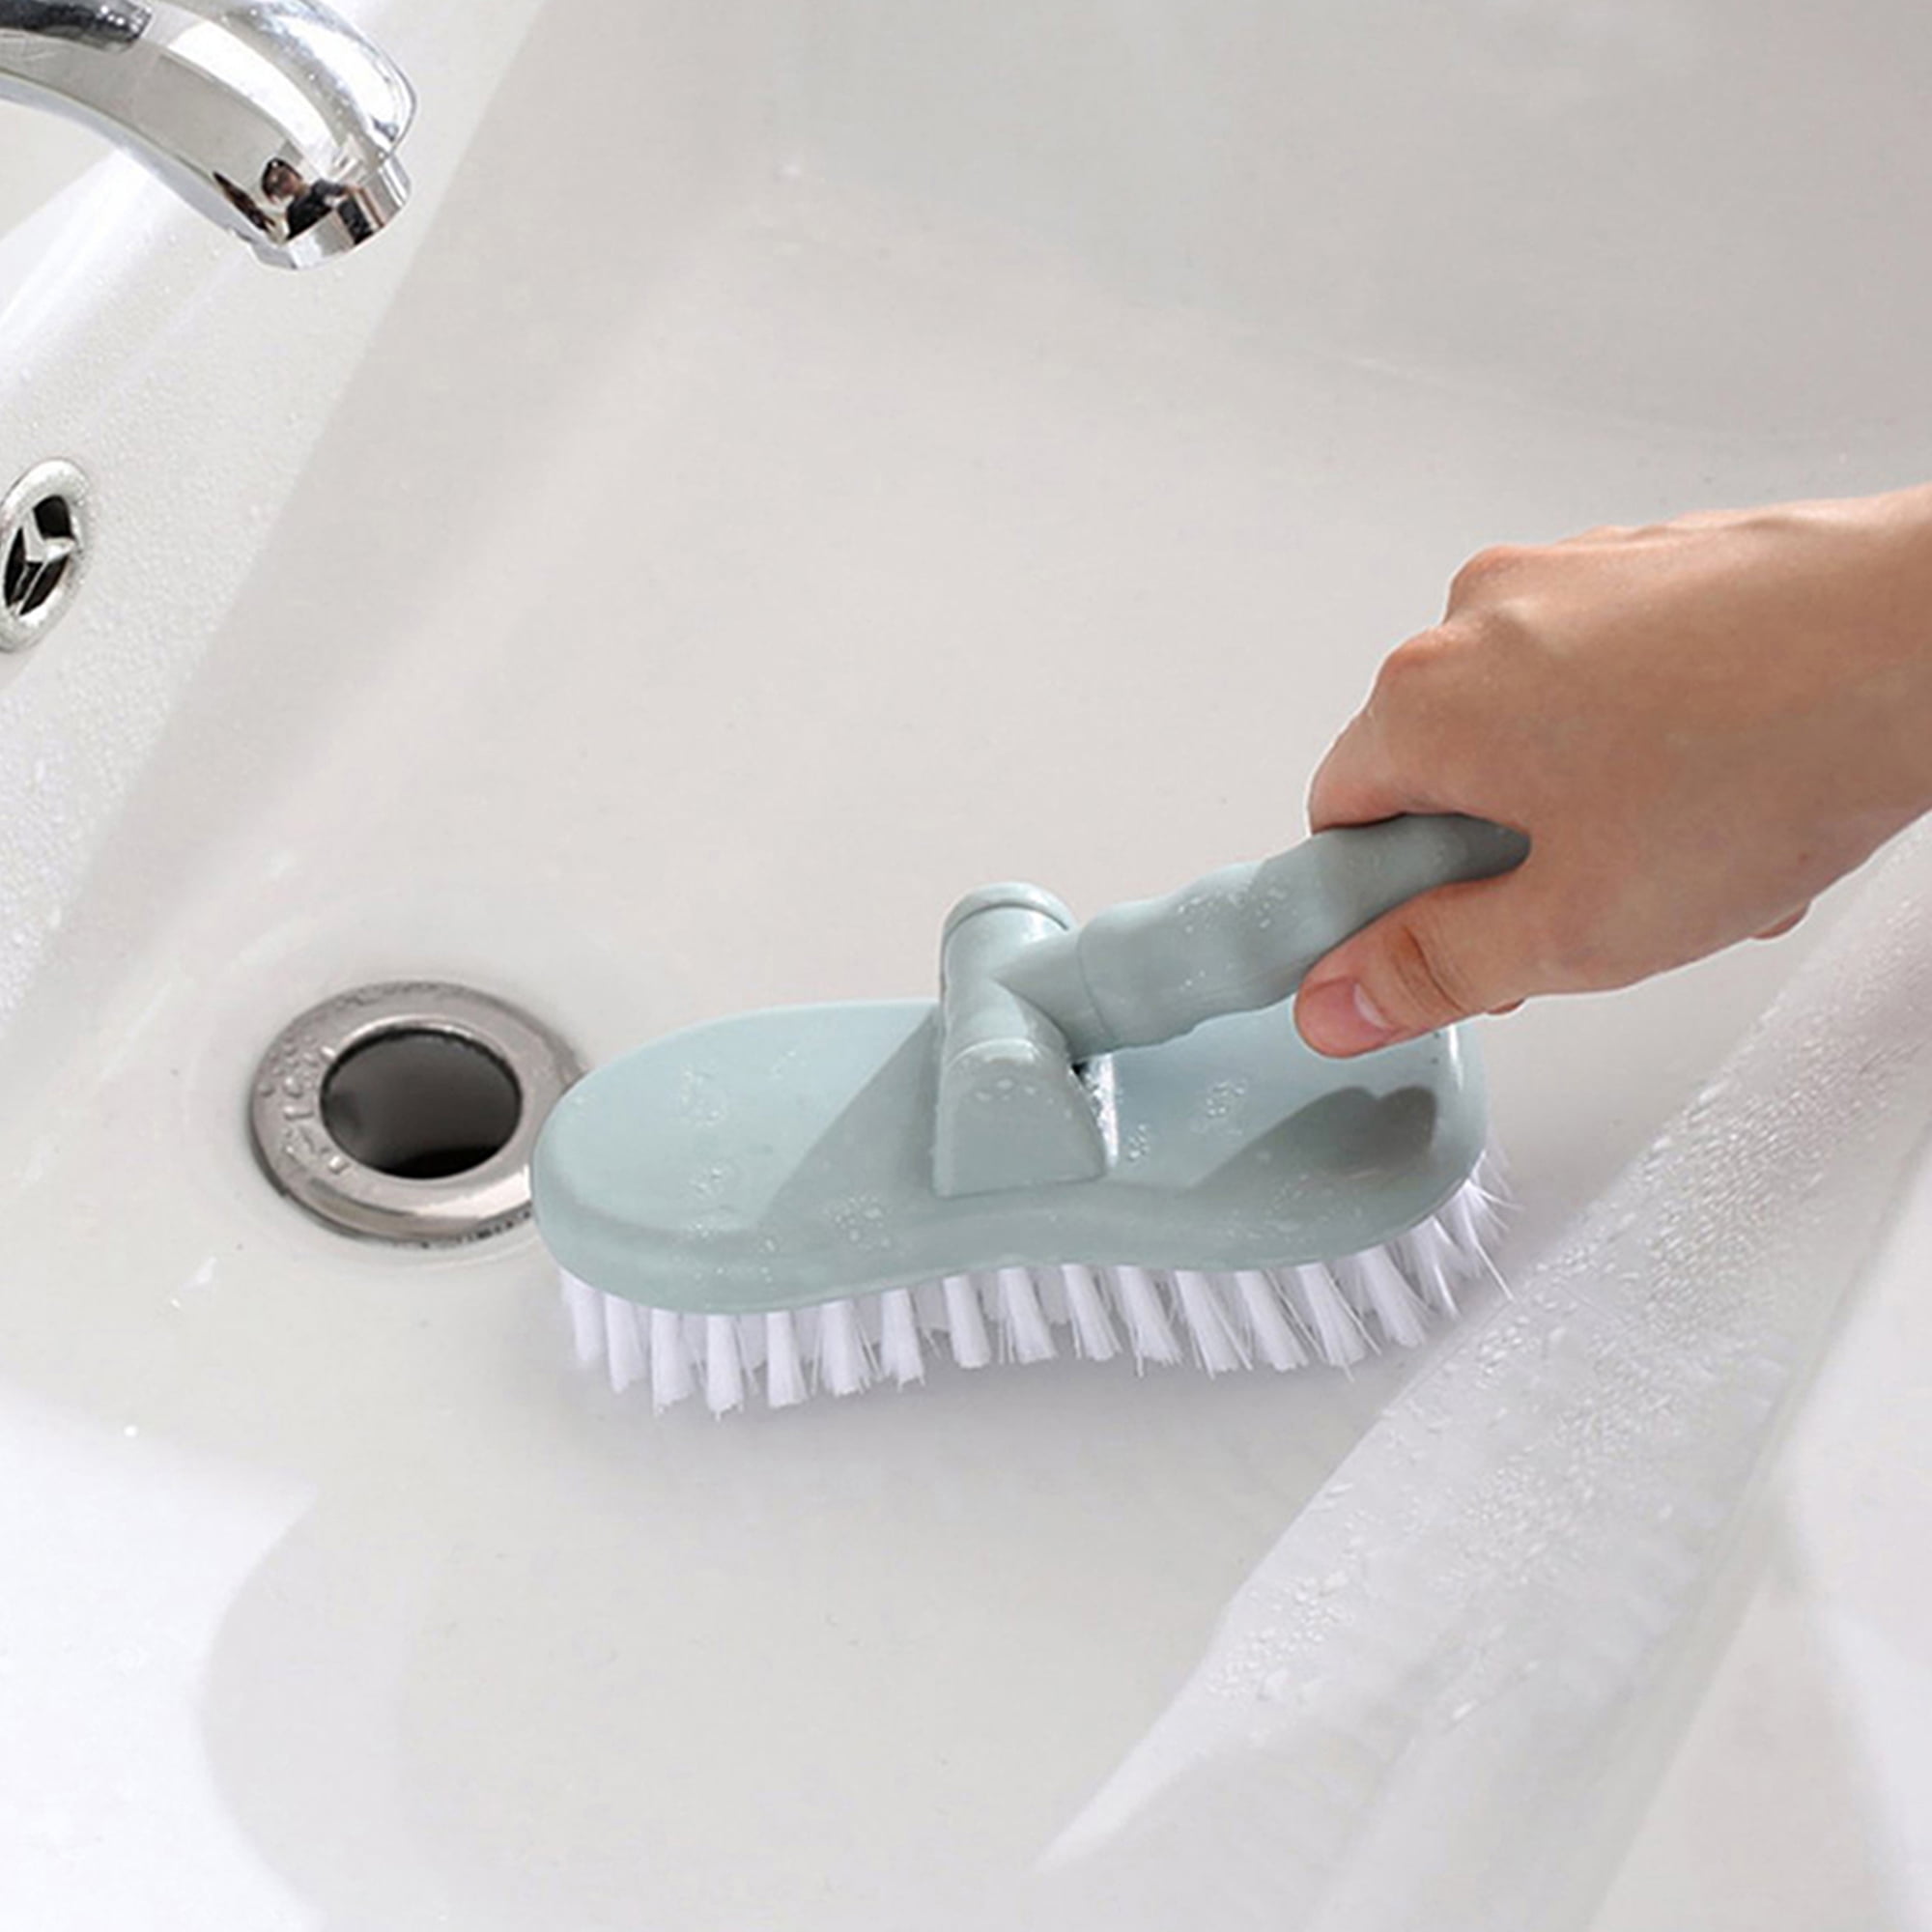 7 in 1 Microfiber Floor Mop Broom Duster Squeegee & Dryer Scrubber Sponge -  On Sale - Bed Bath & Beyond - 36367115